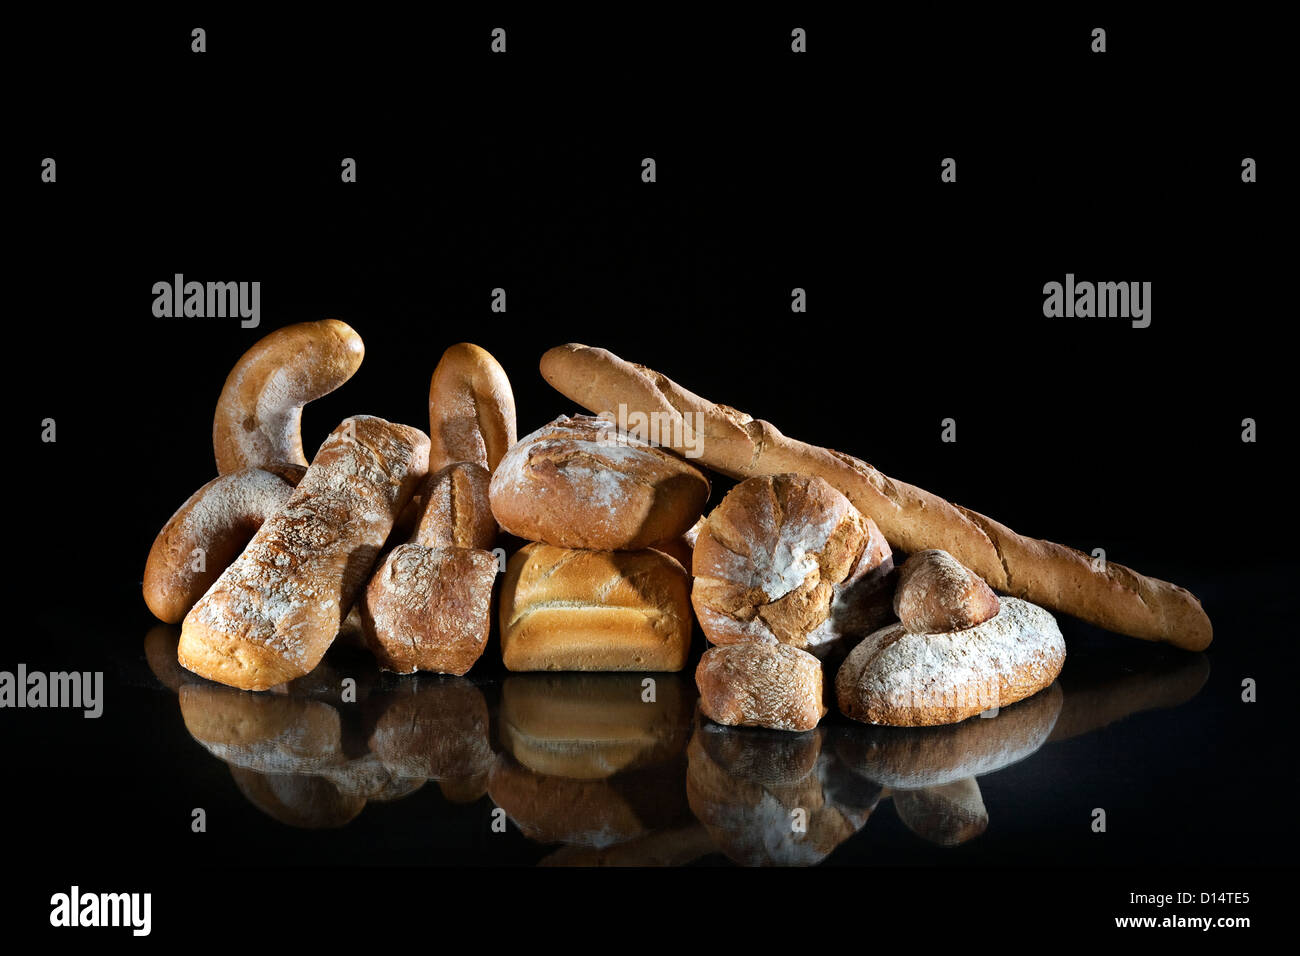 Surtido de baguettes francesas, diferentes panes y hogazas de pan sobre fondo negro Foto de stock